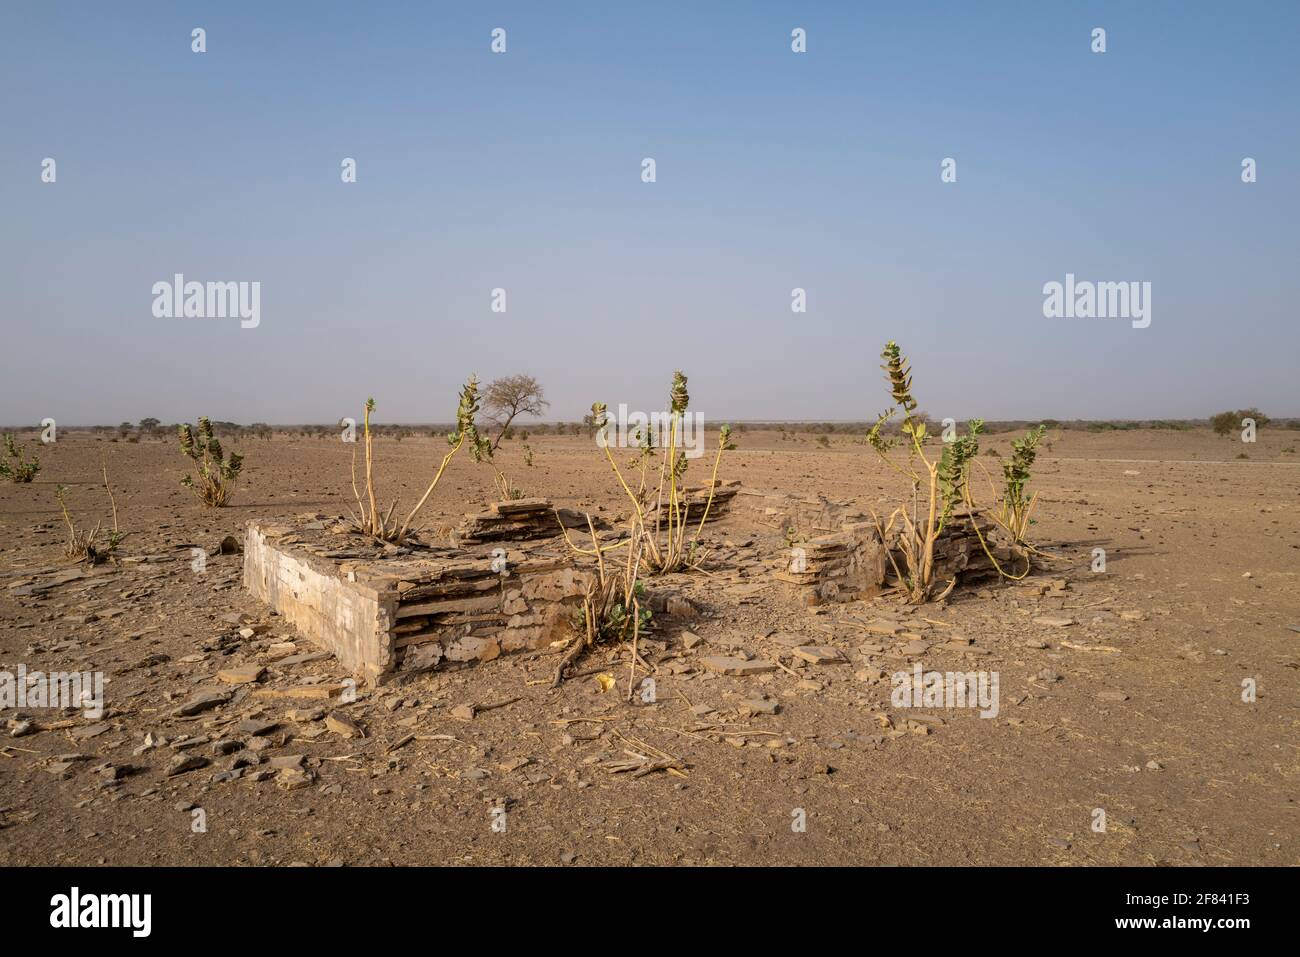 Archeological Remains of Kumbi Saleh, the last capital of the ancient kingdom of Ghana, Hodh Ech Chargui Region, Mauritania Stock Photo